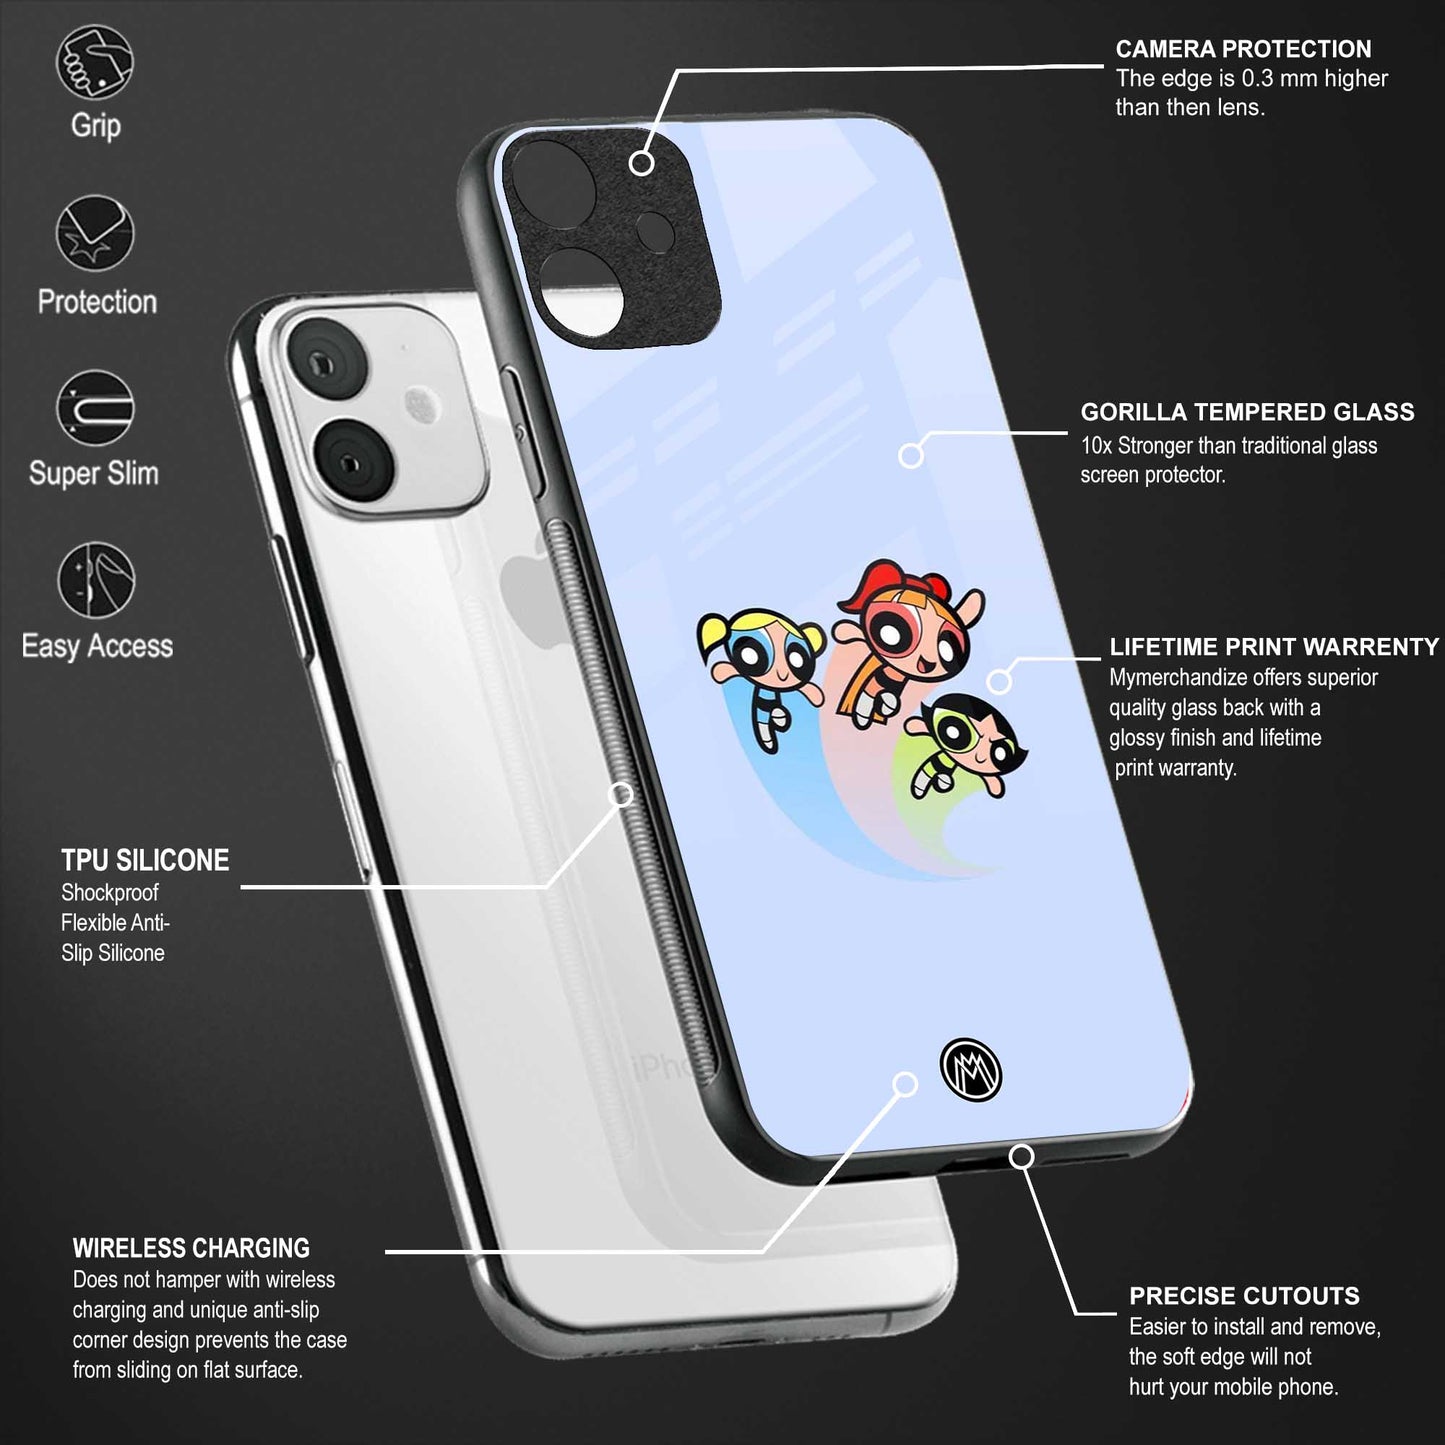 powerpuff girls cartoon back phone cover | glass case for vivo y35 4g